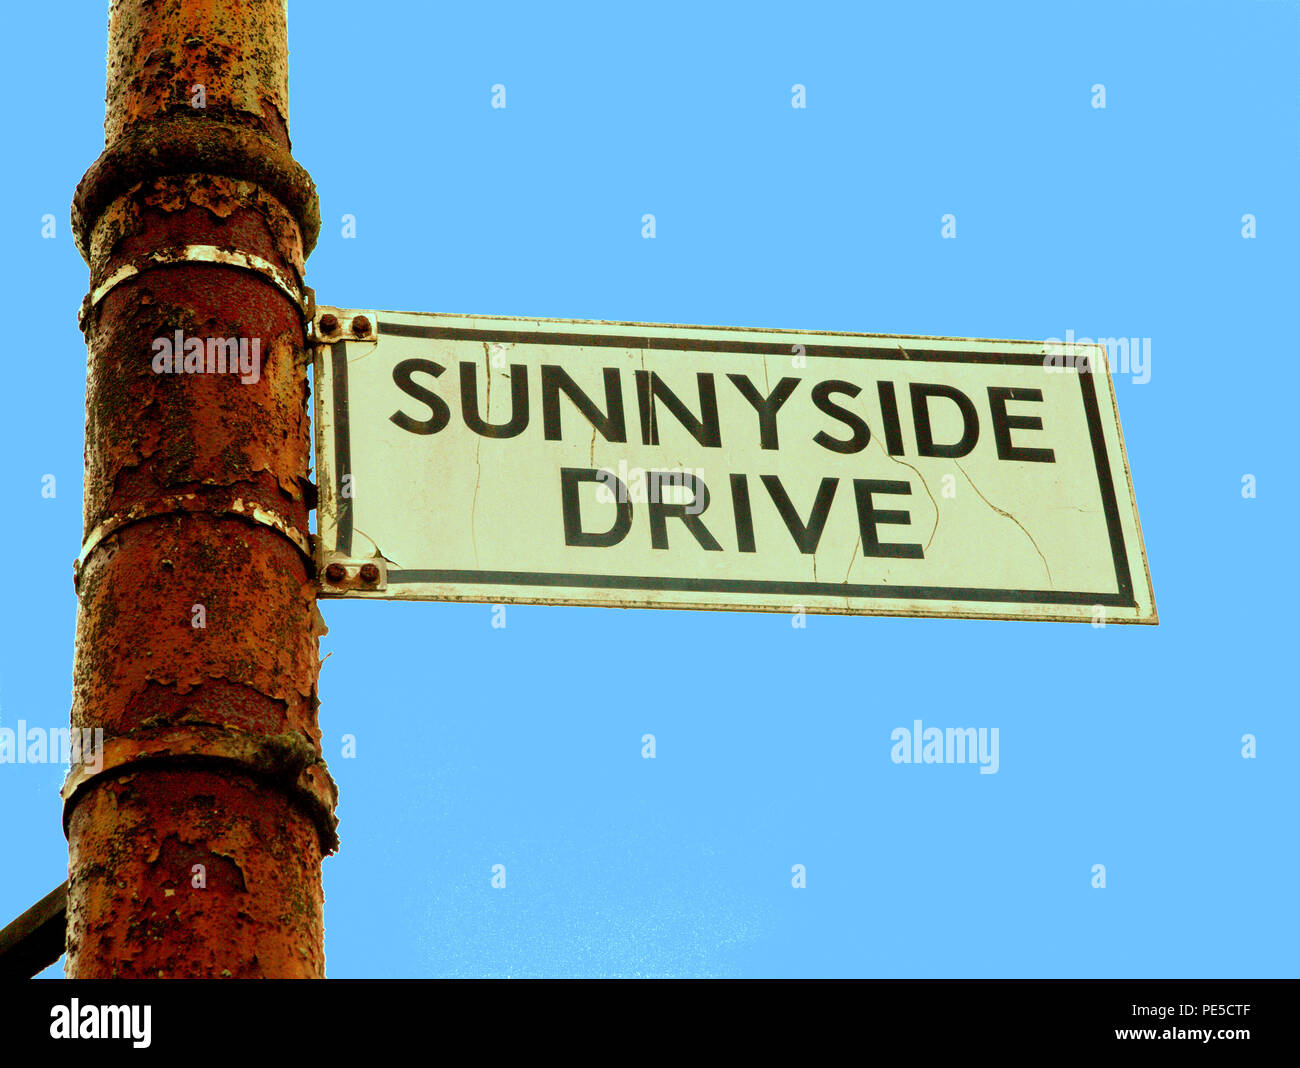 Sunnyside Drive street sign concept blue skies positivity Banque D'Images